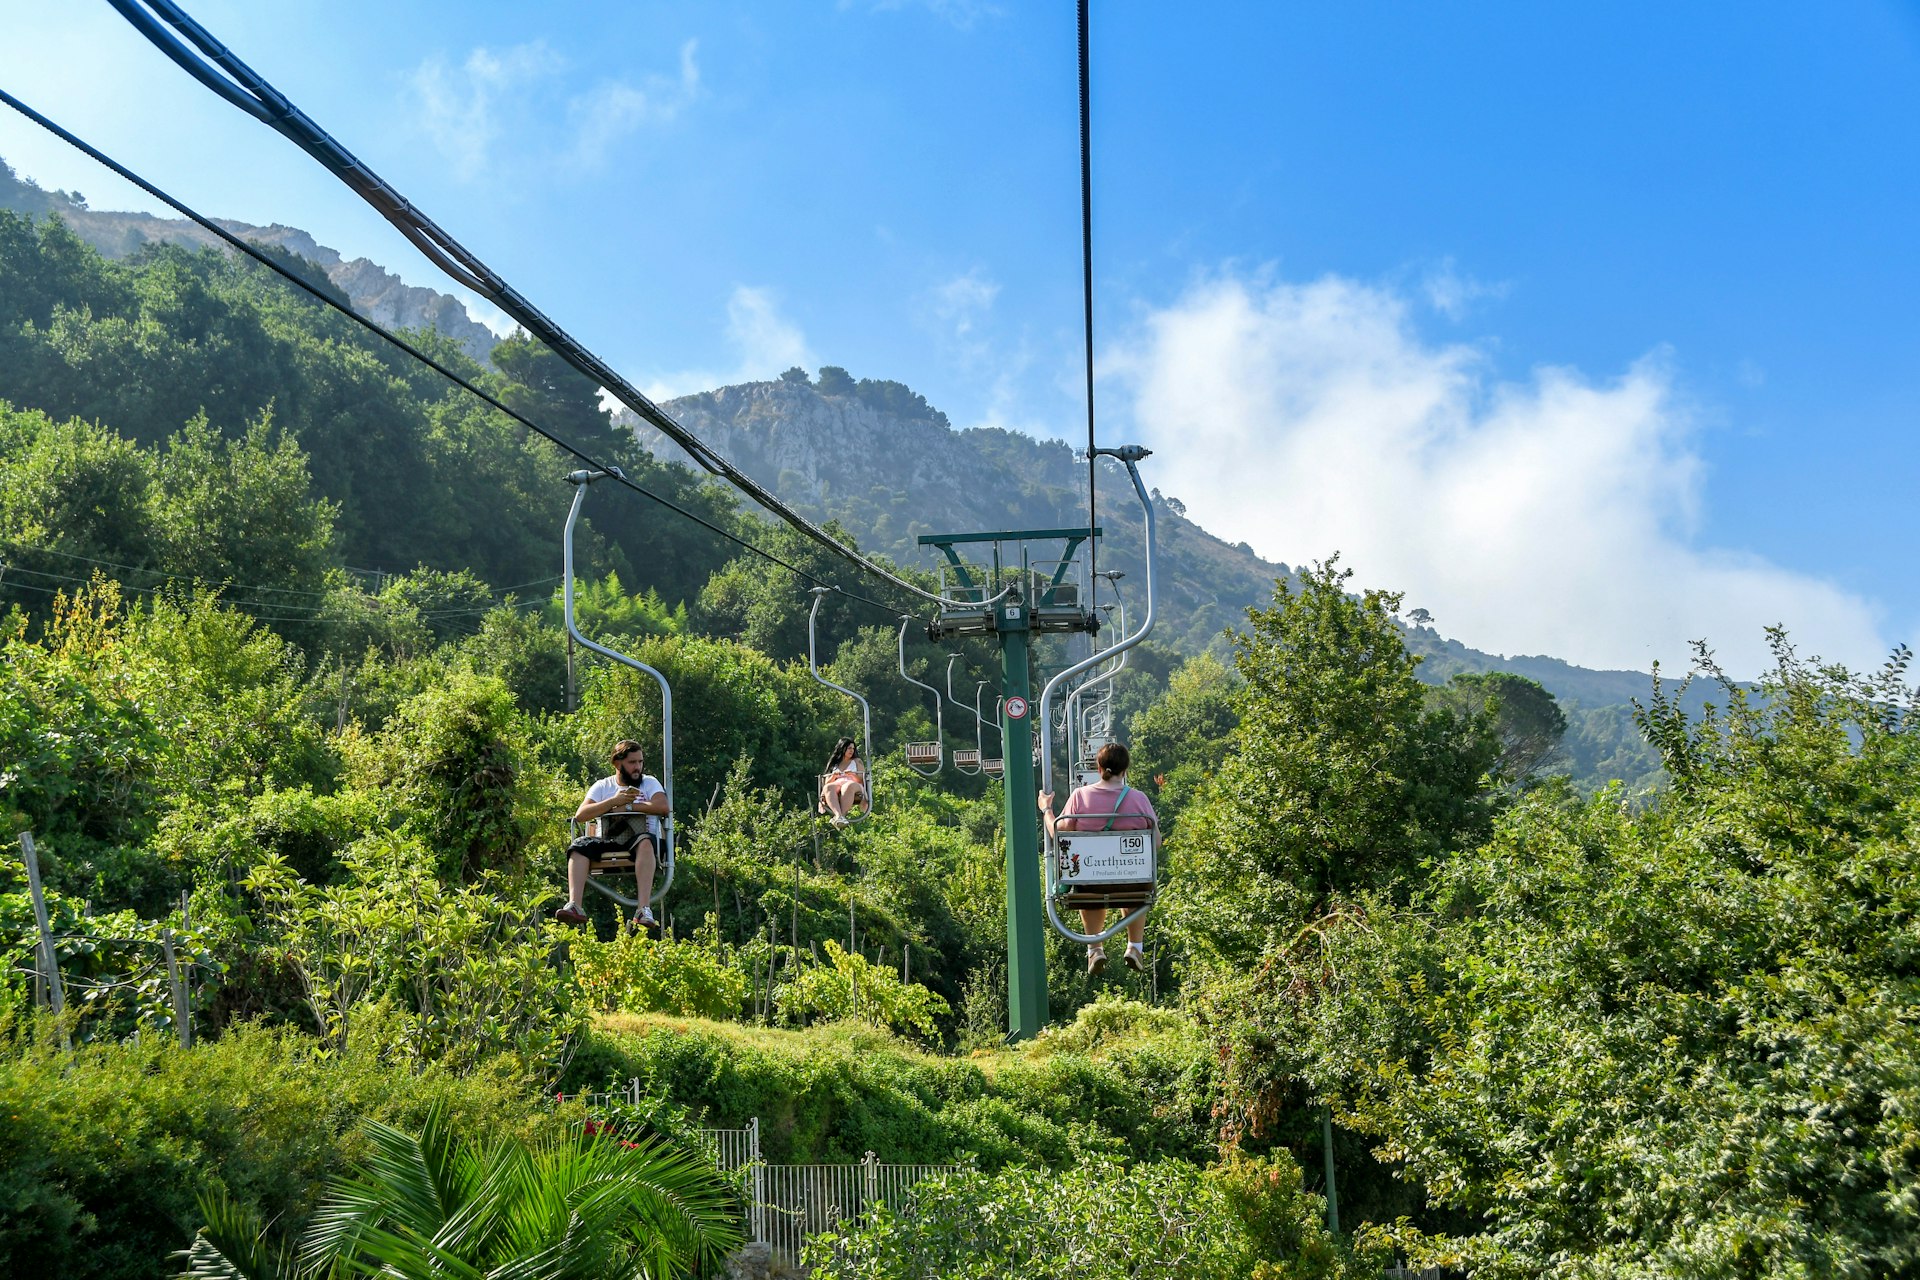 Person on a chair lift ascending Mount Solaro on Capri